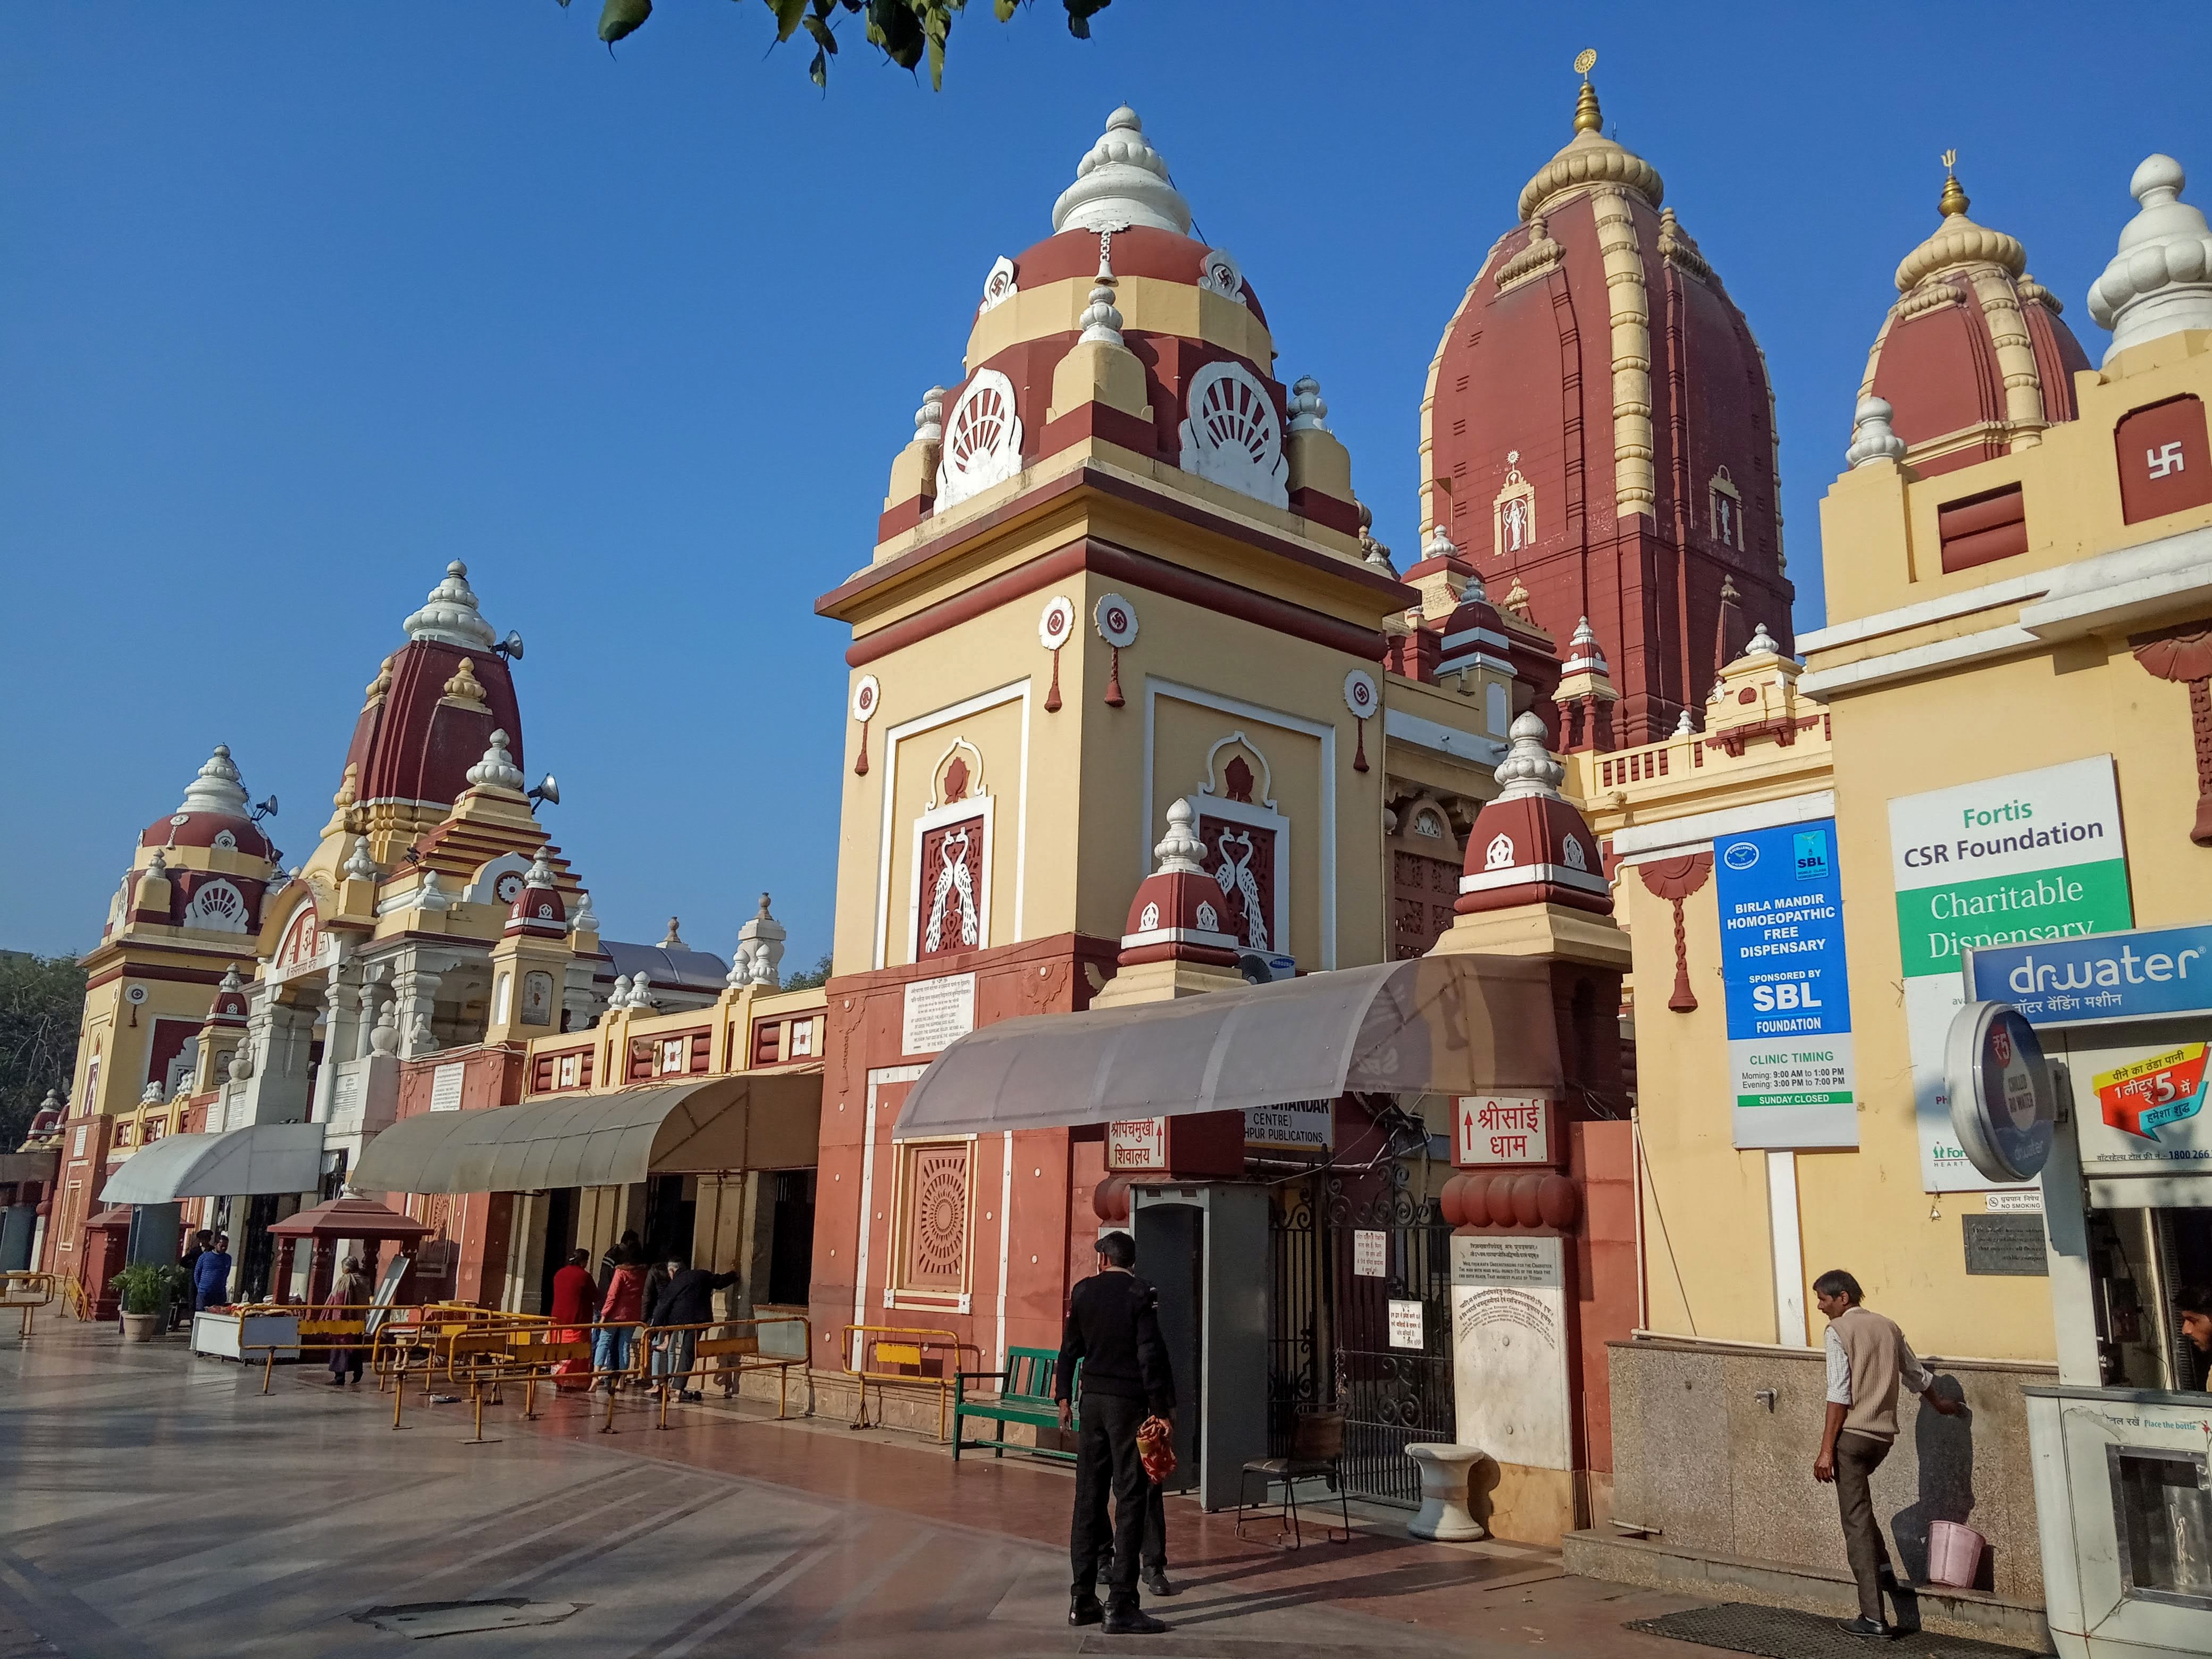 Laxmi Narayan Temple